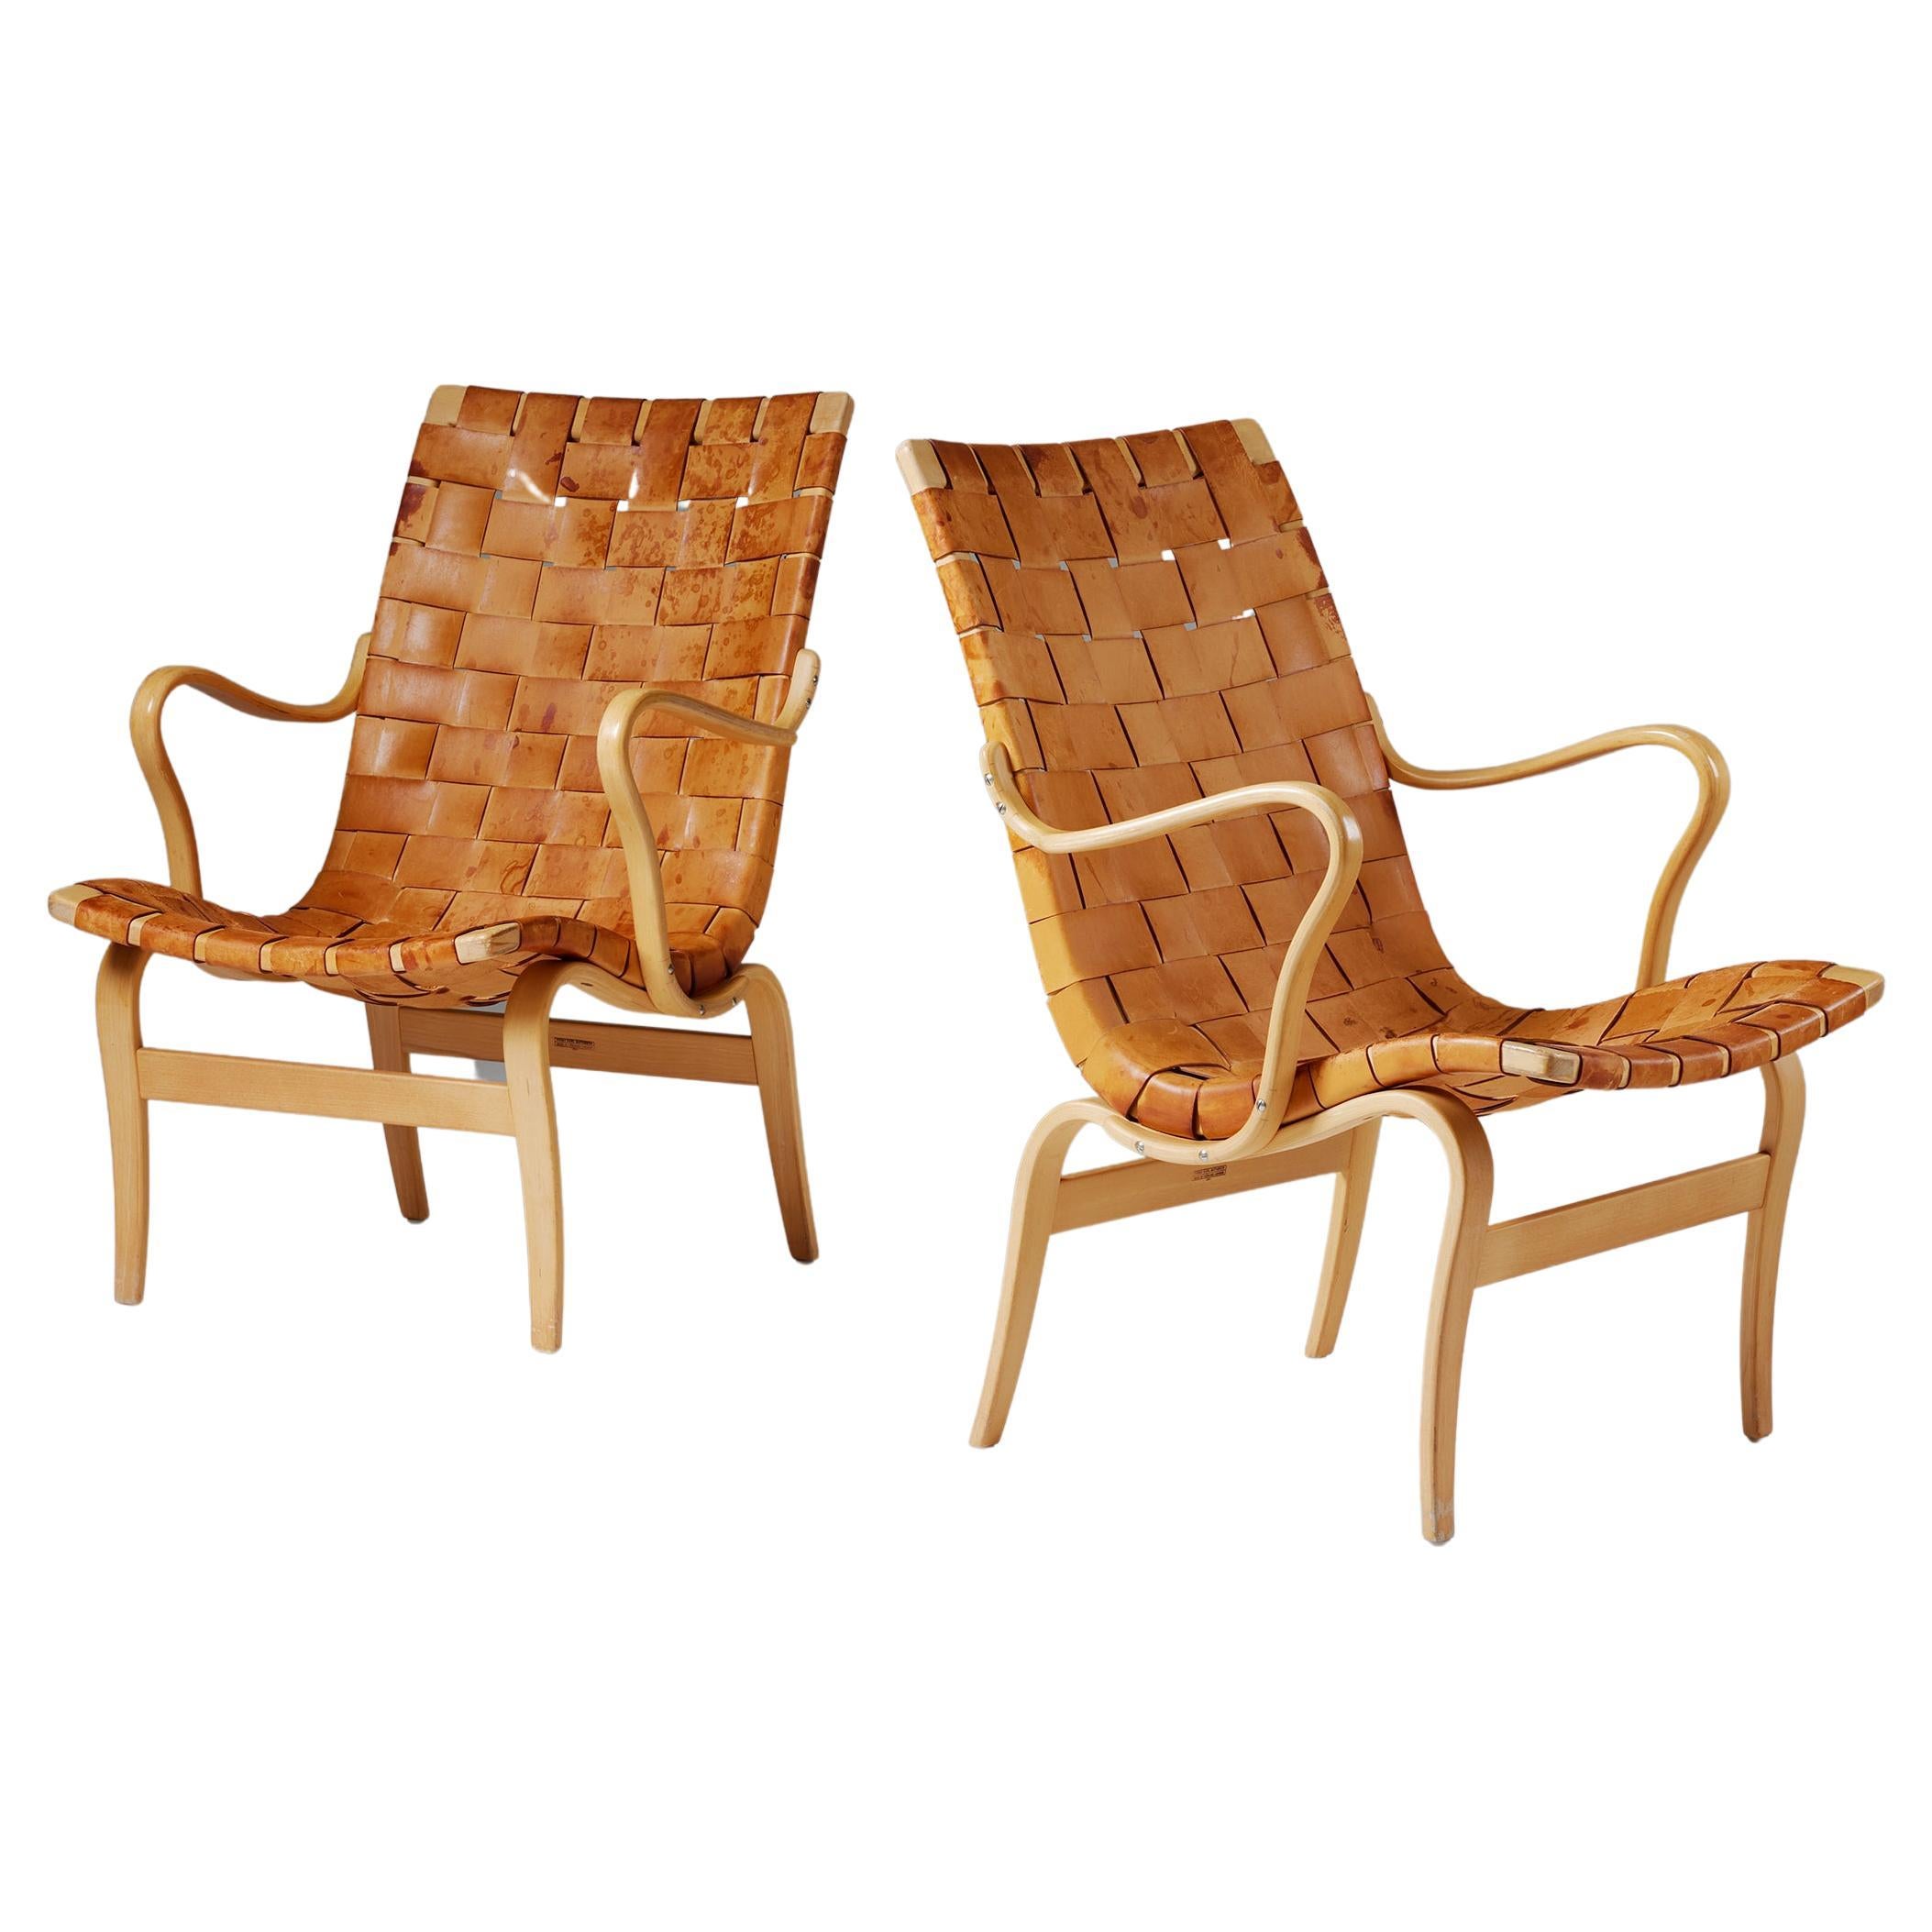 Pair of armchairs ‘Eva’ designed by Bruno Mathsson for Karl Mathsson, Swedish